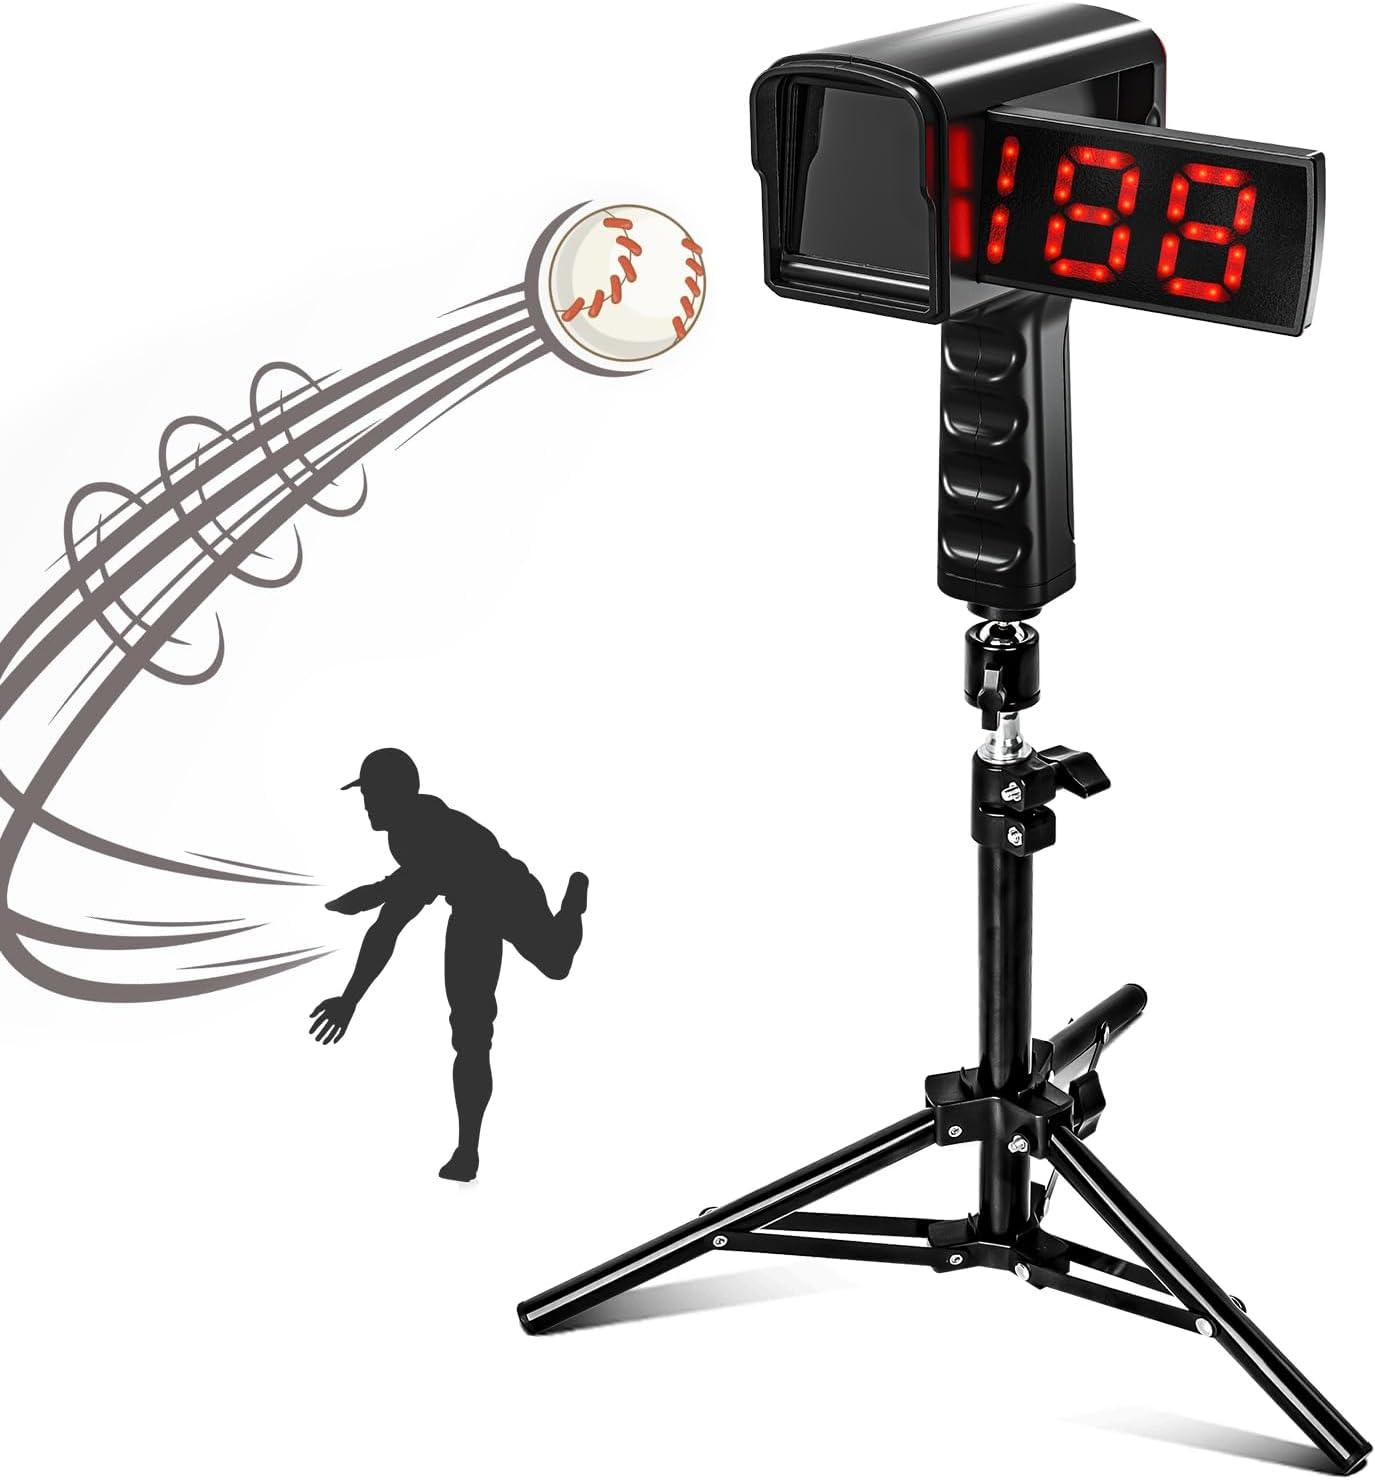 PLAYAPUT Baseball Radar Gun - Baseball Speed Training Equipment With LED+LCD And Deluxe Tripod - PlayaPut